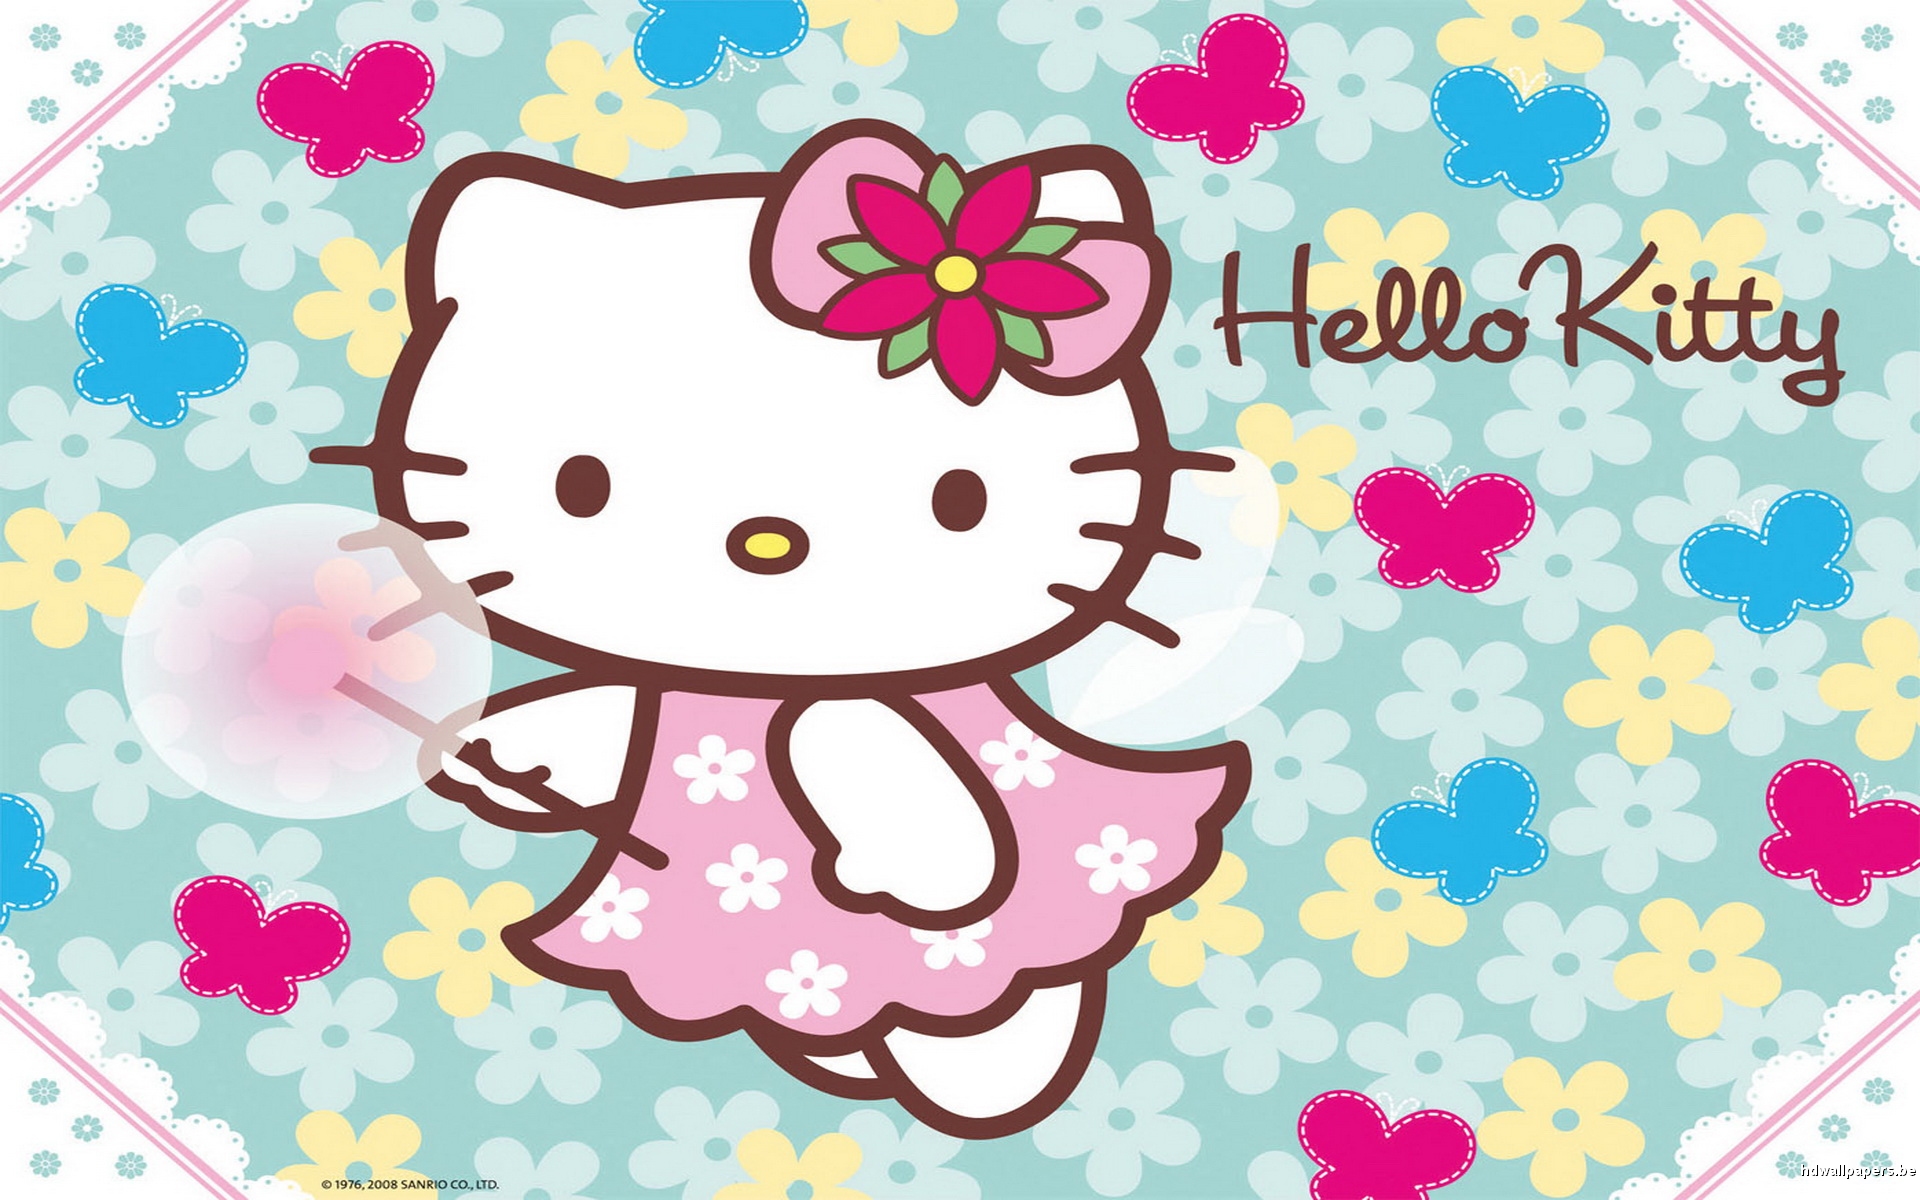 Hello Kitty HD Wallpaper Image For Mac Cartoons